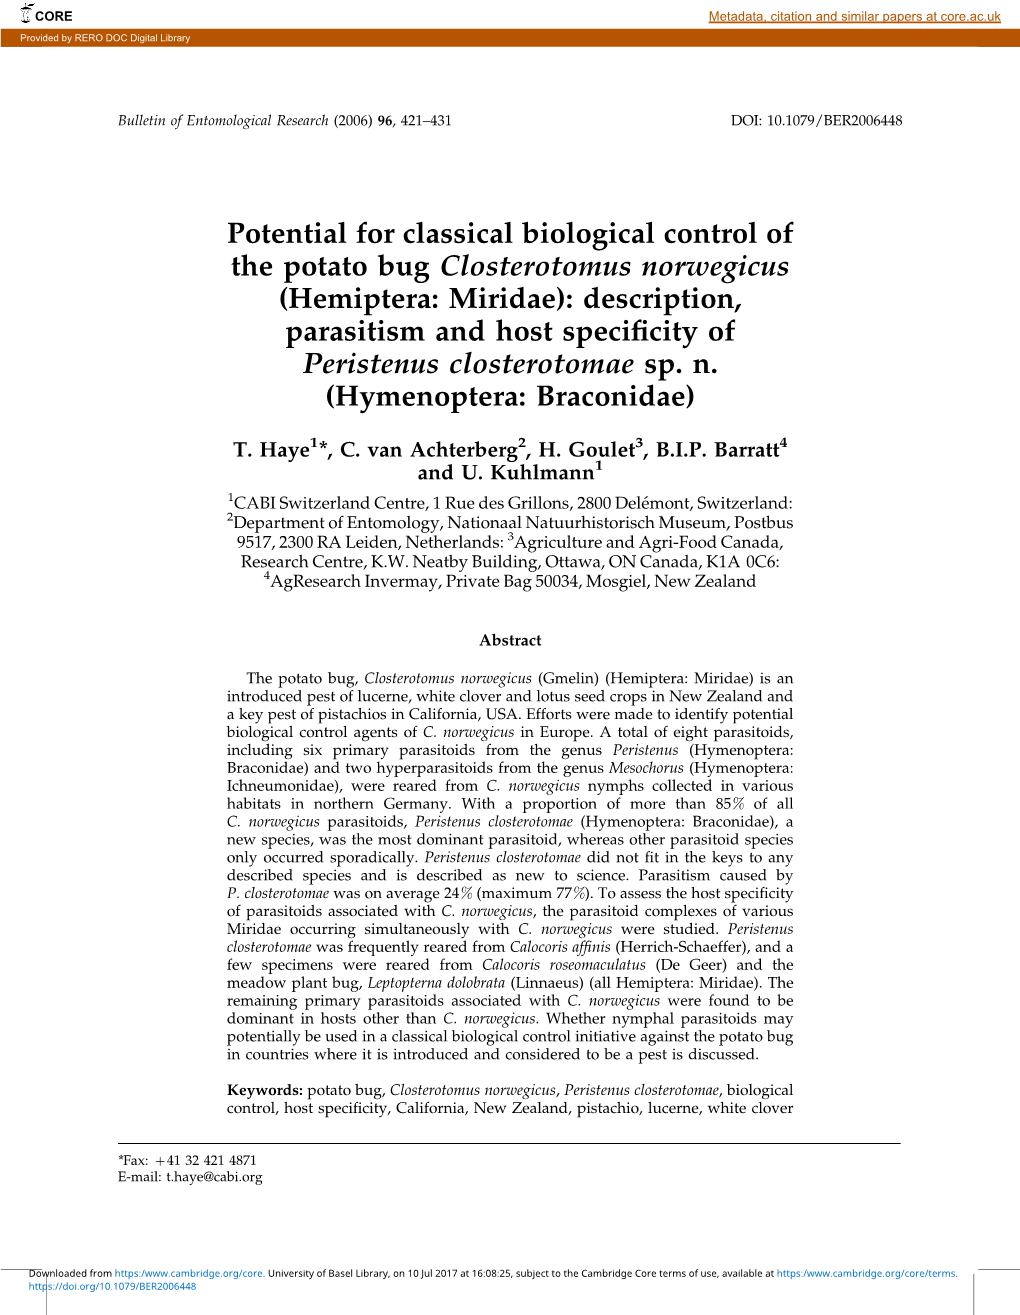 Potential for Classical Biological Control of the Potato Bug Closterotomus Norwegicus (Hemiptera: Miridae): Description, Parasi